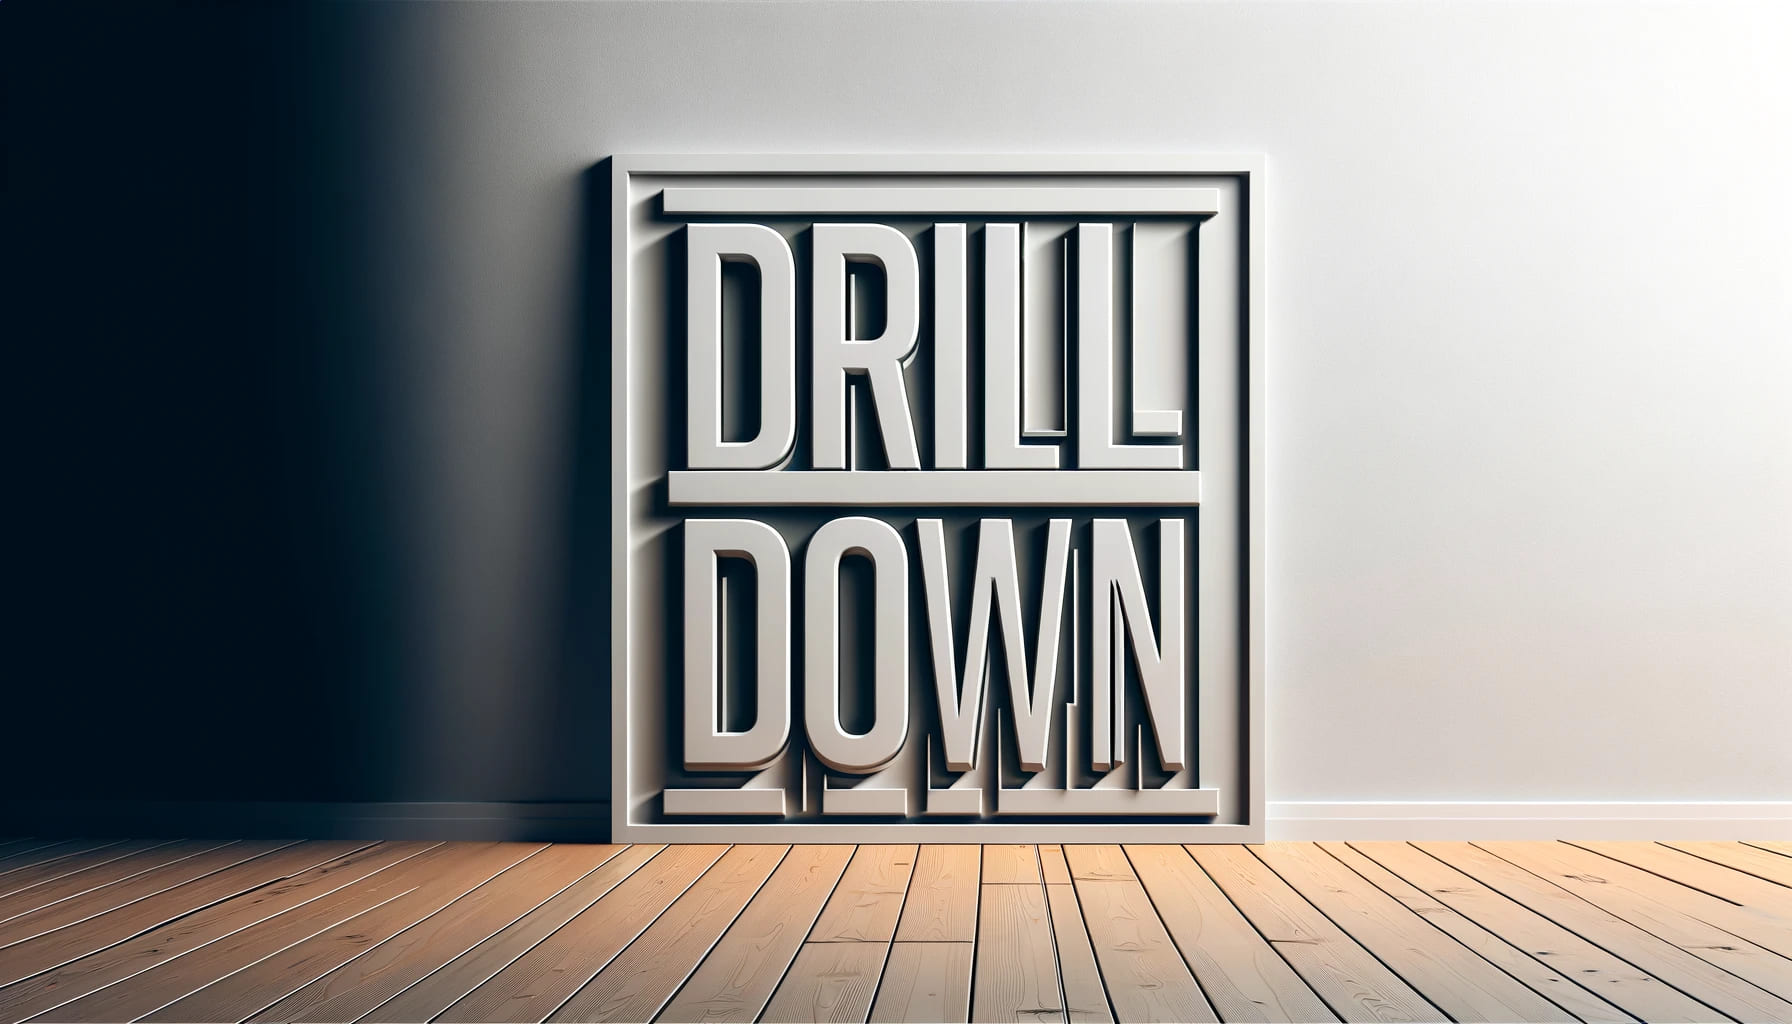 Drill-Down